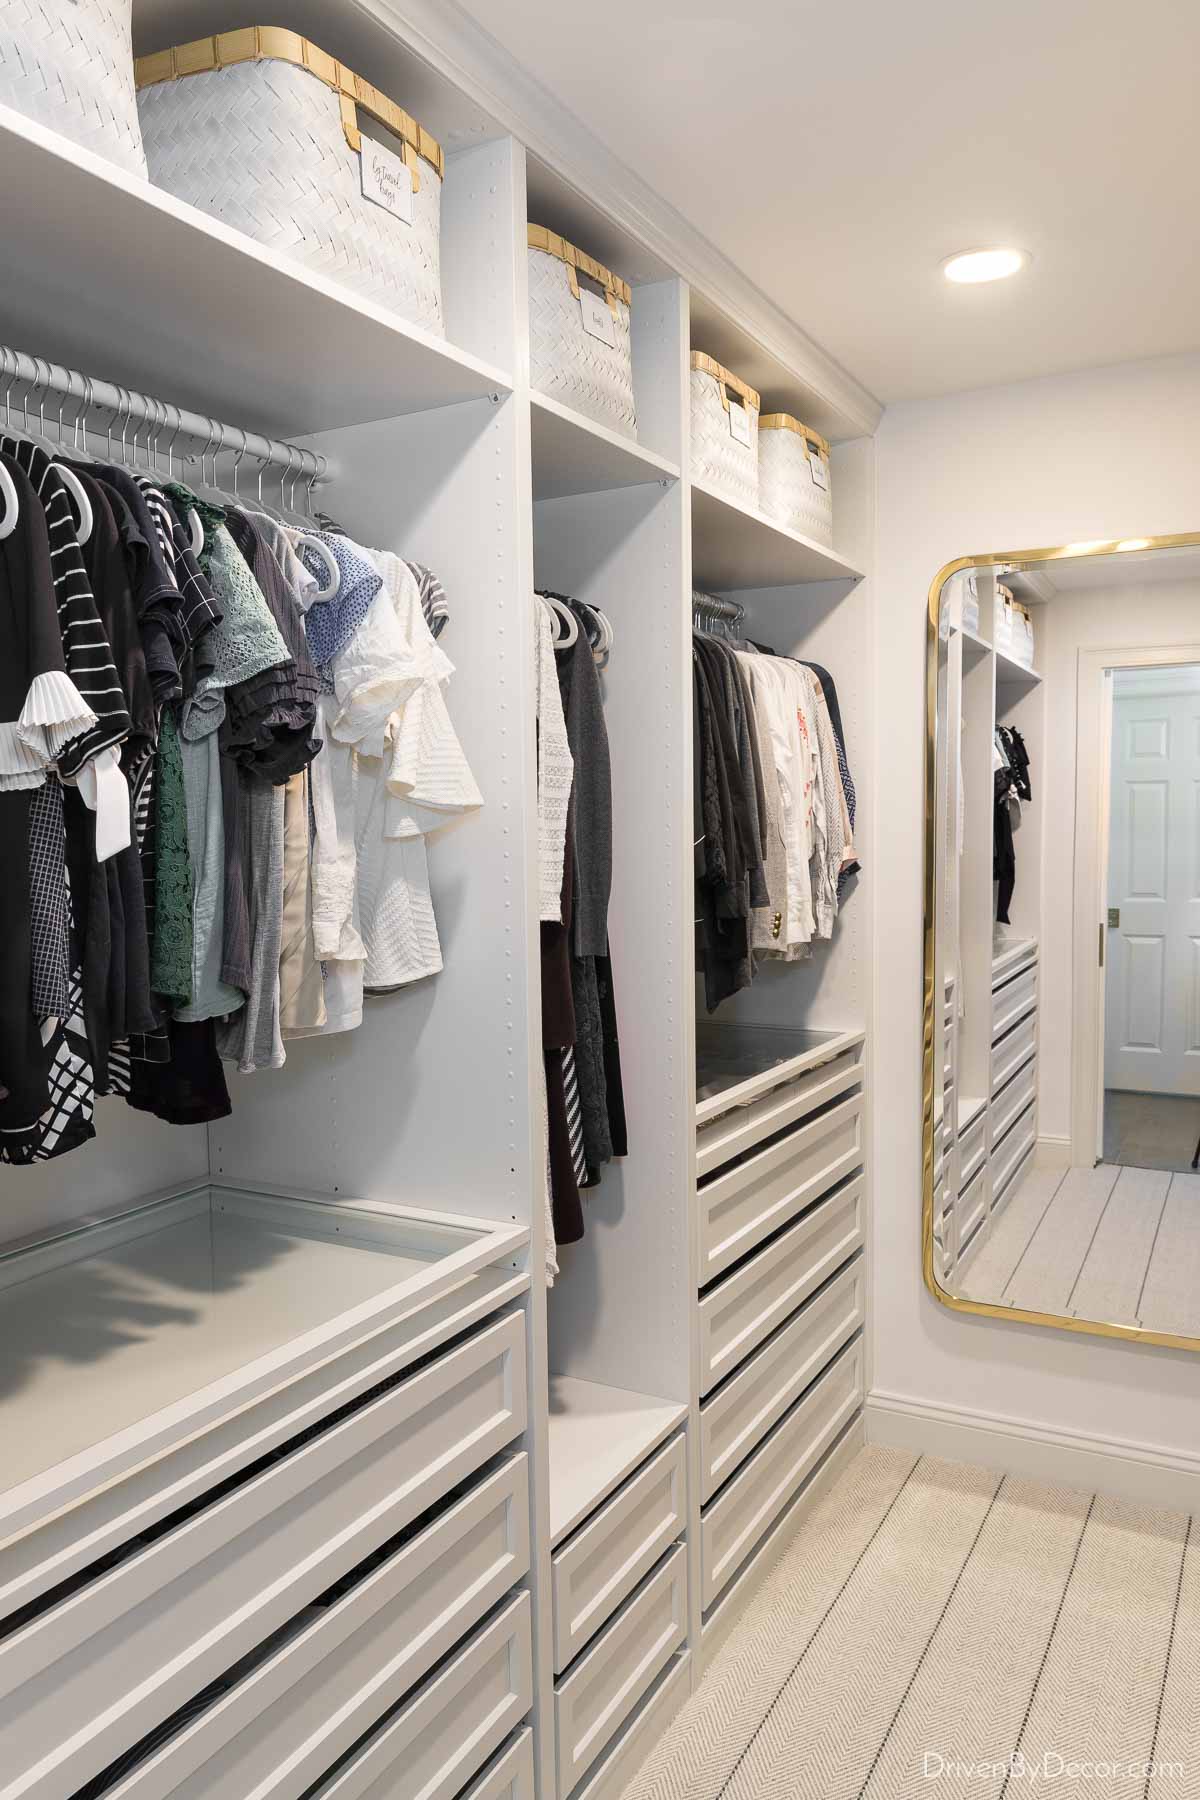 Our IKEA PAX closet system design